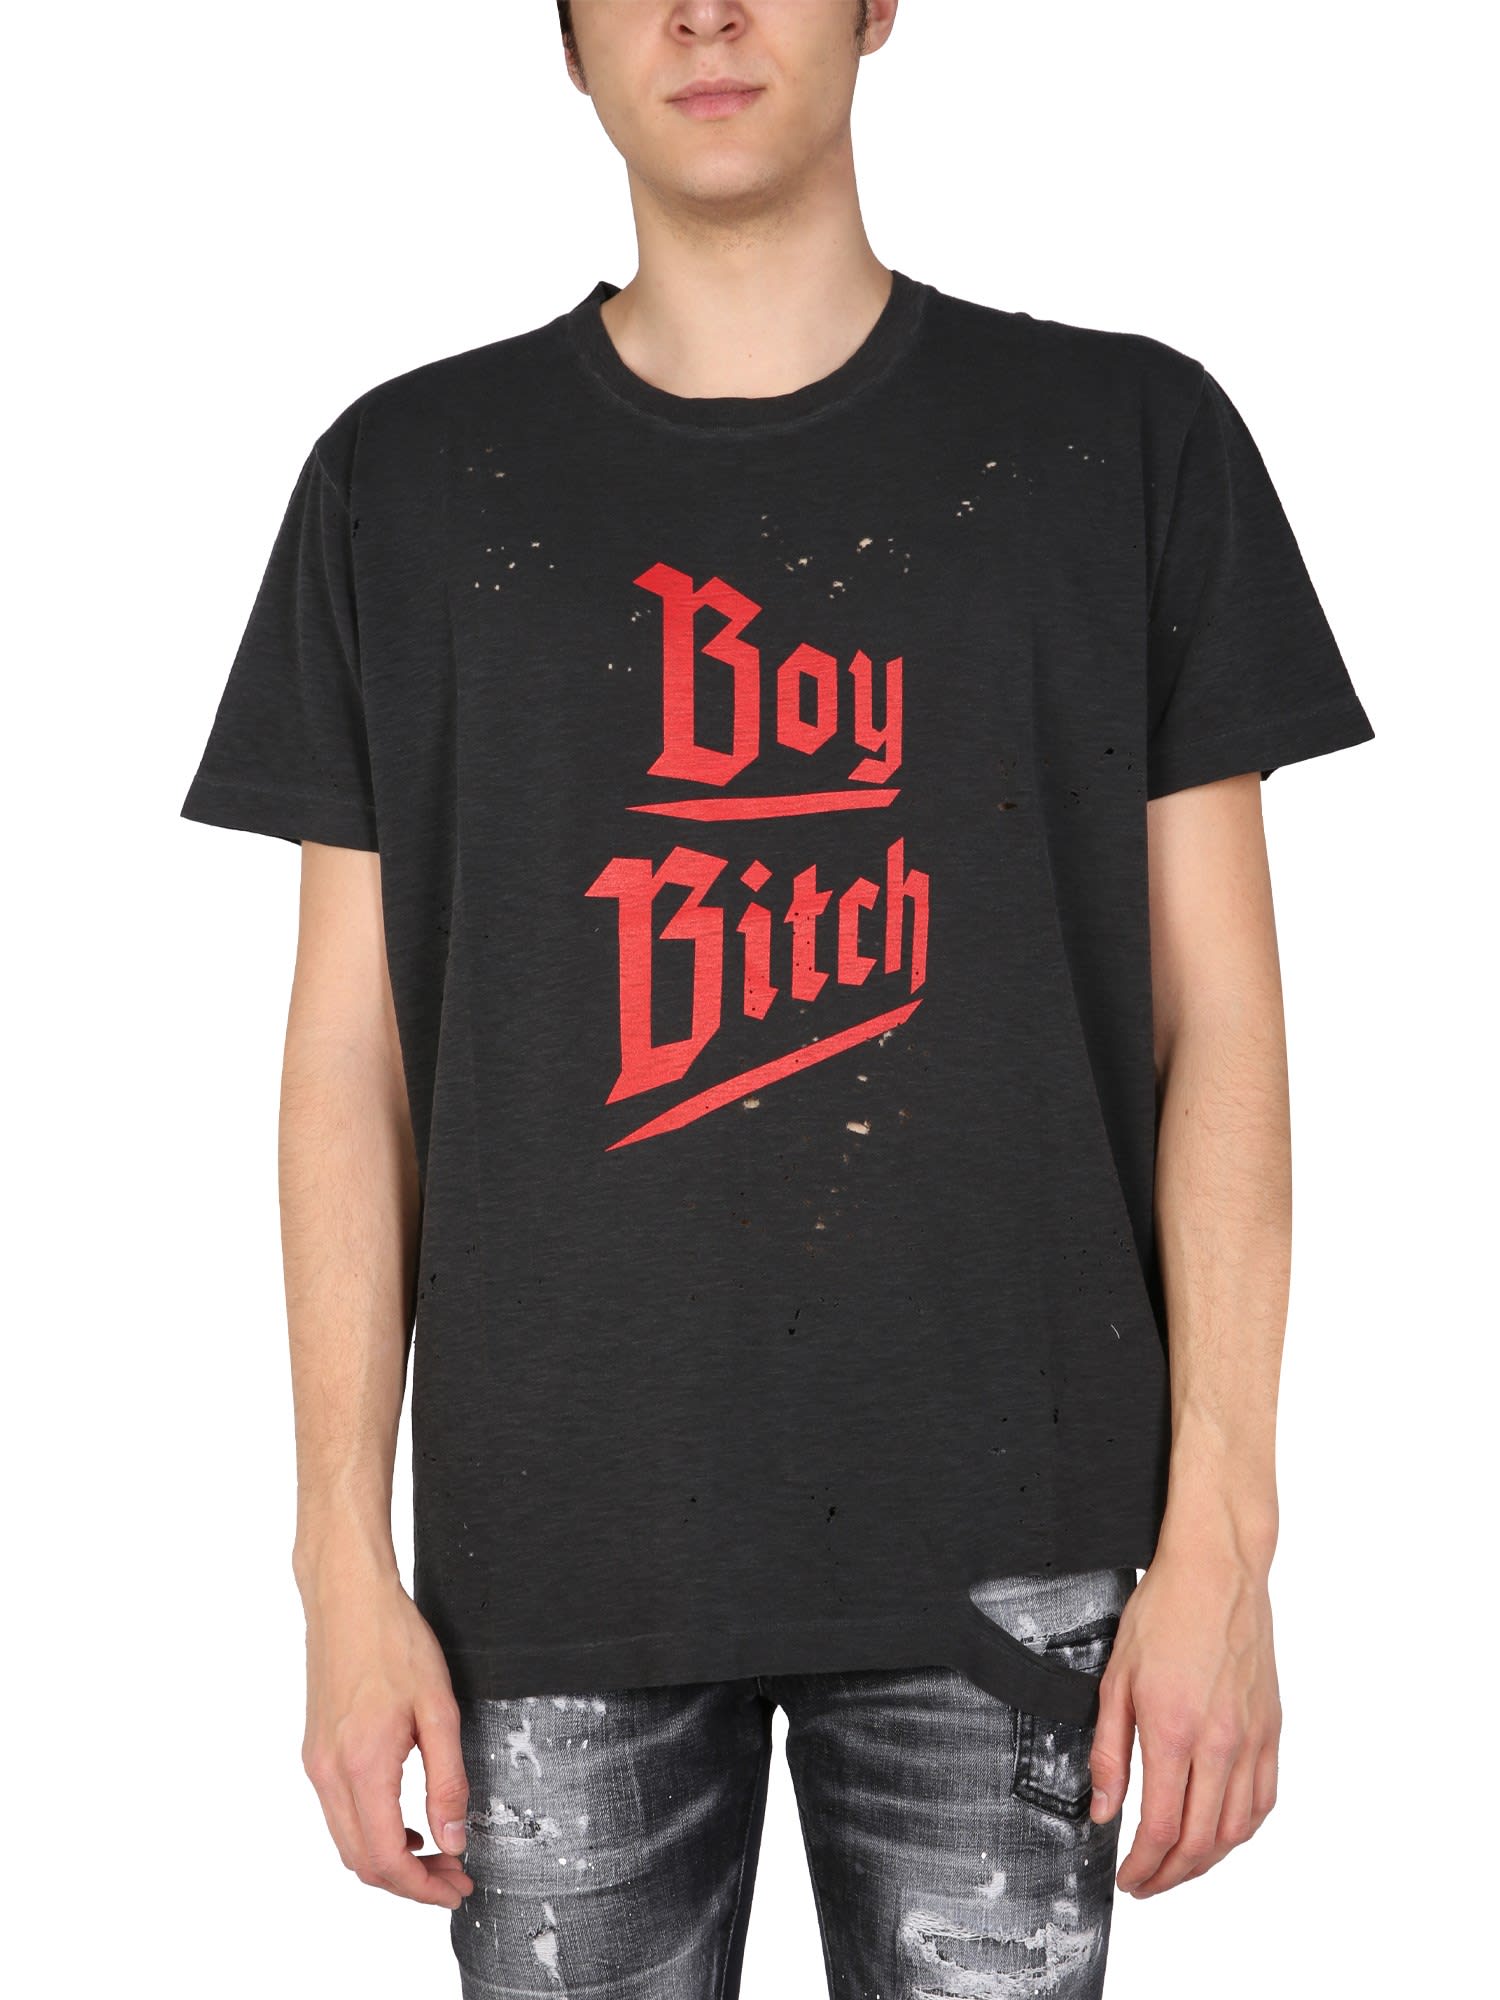 Dsquared2 Boybitch T-shirt